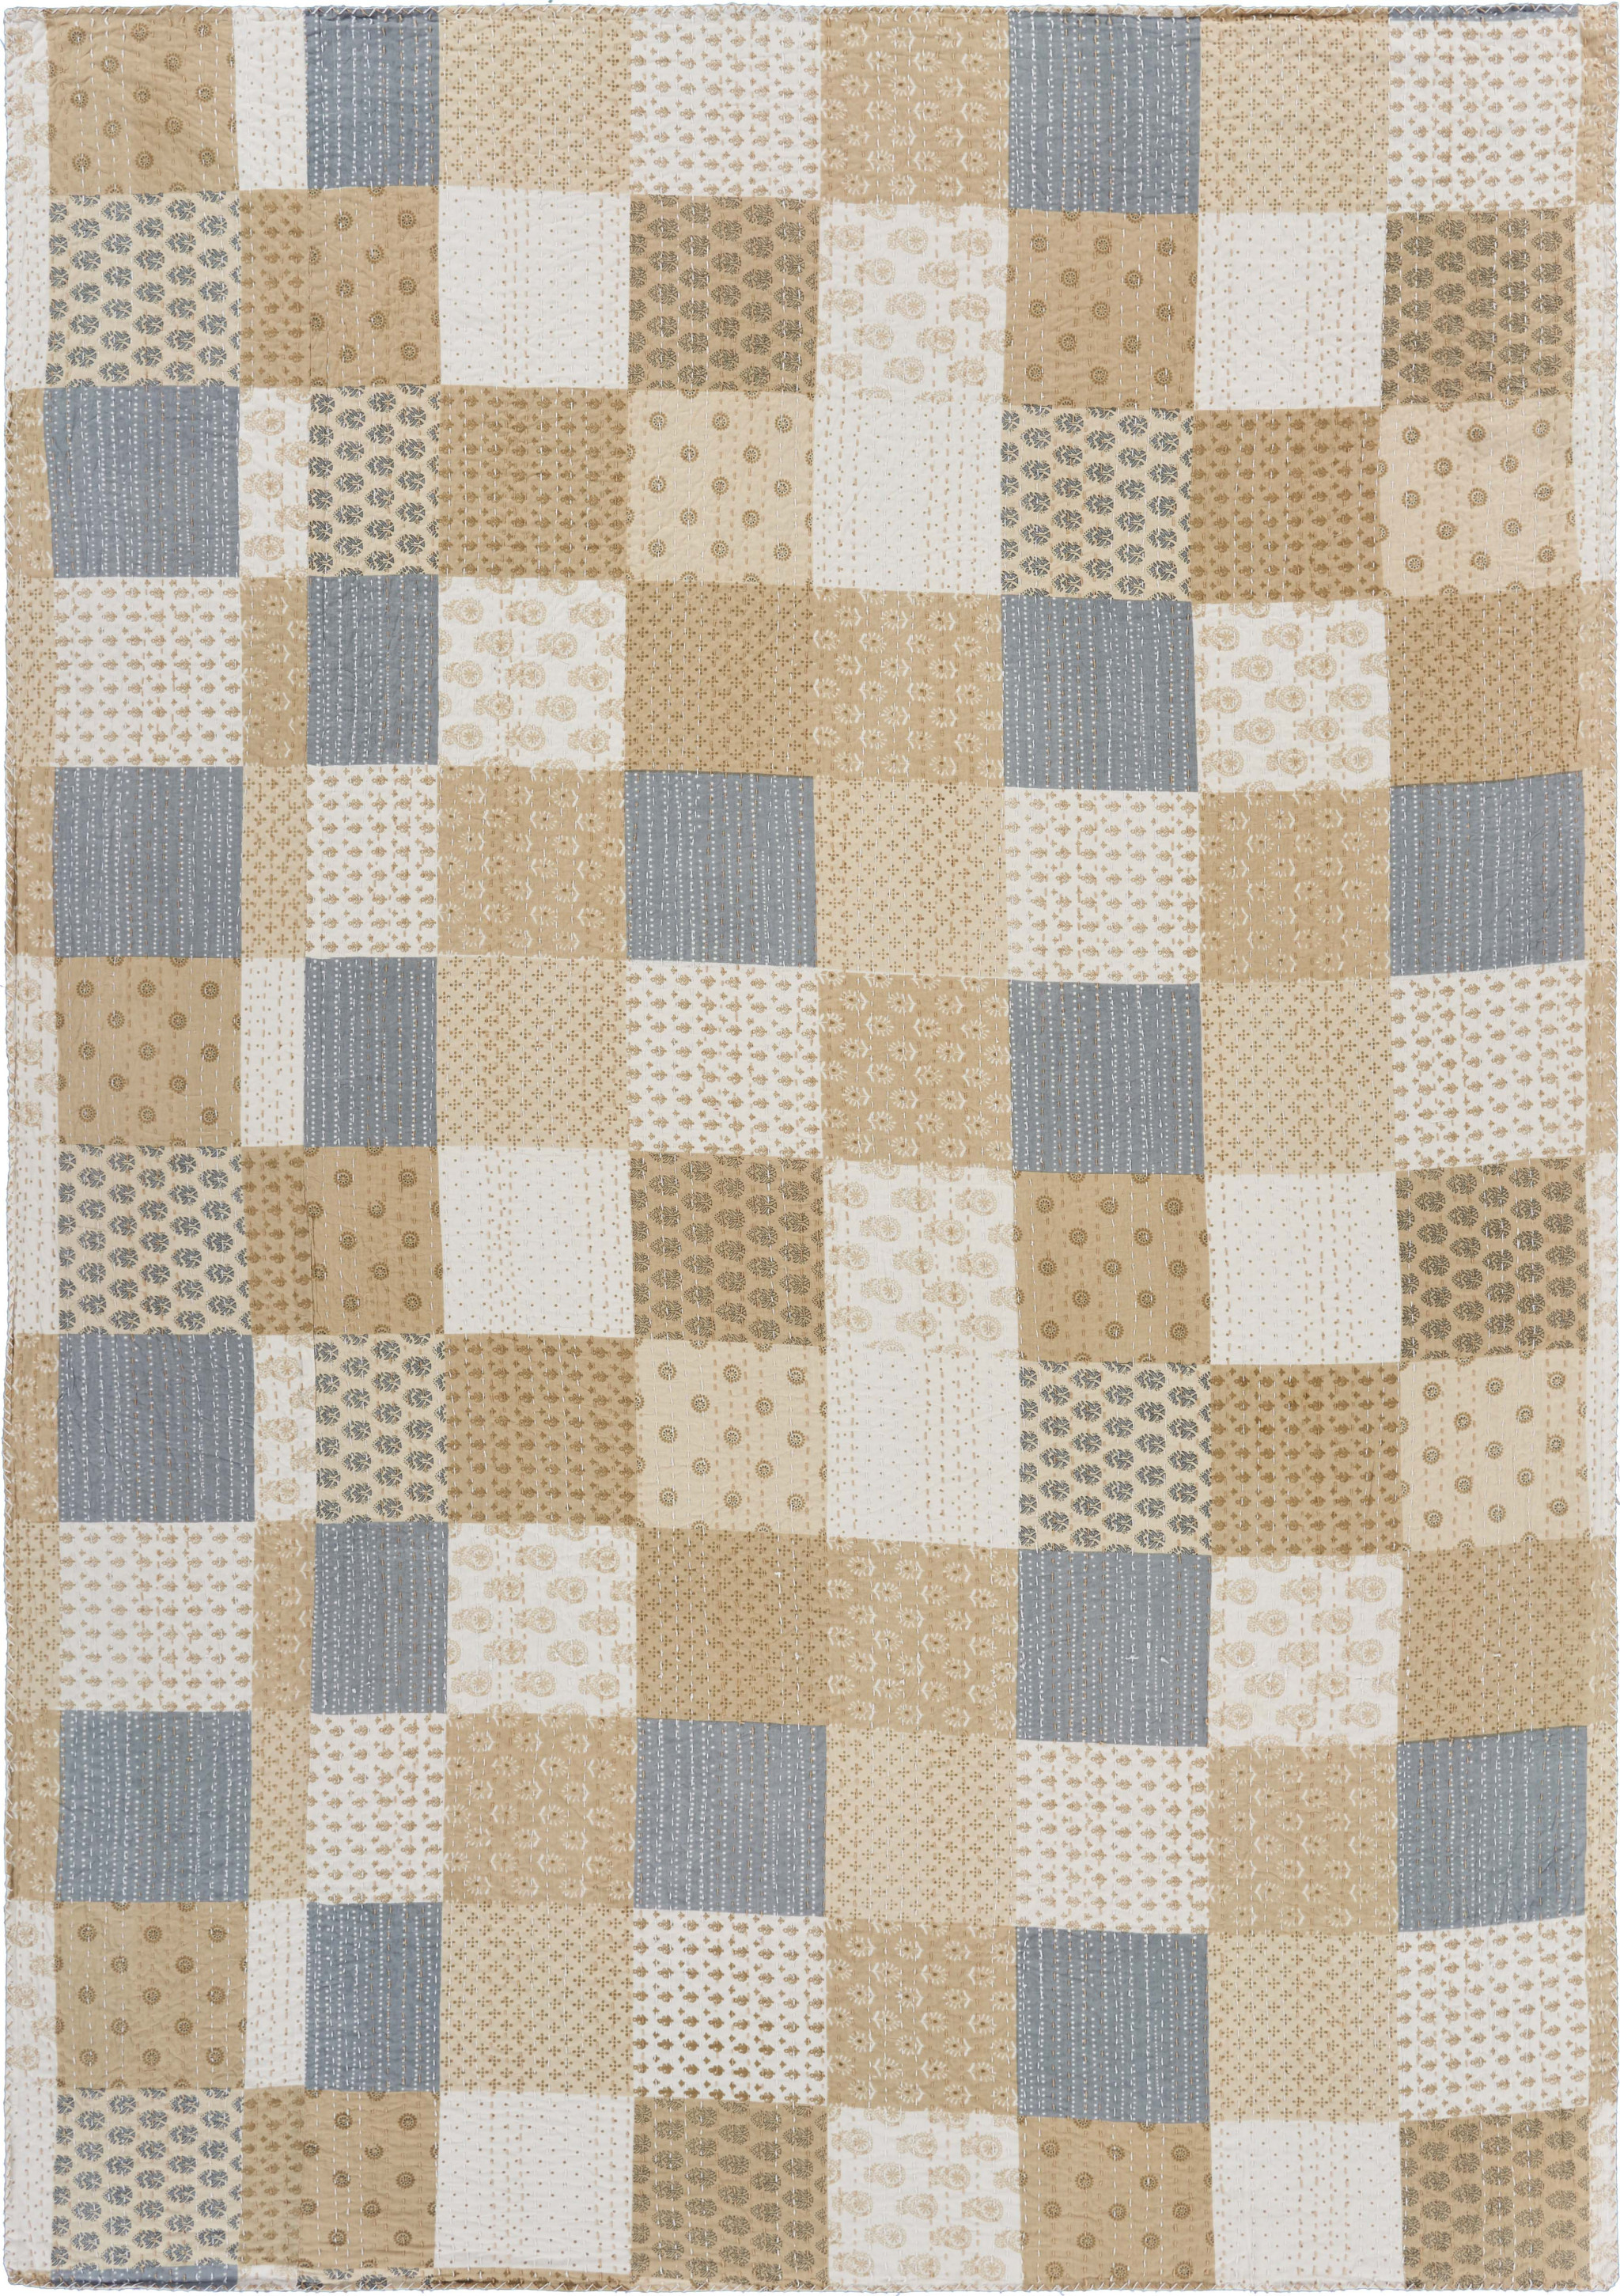 Beige Knitted Cotton Patchwork Throw Blanket-516586-1